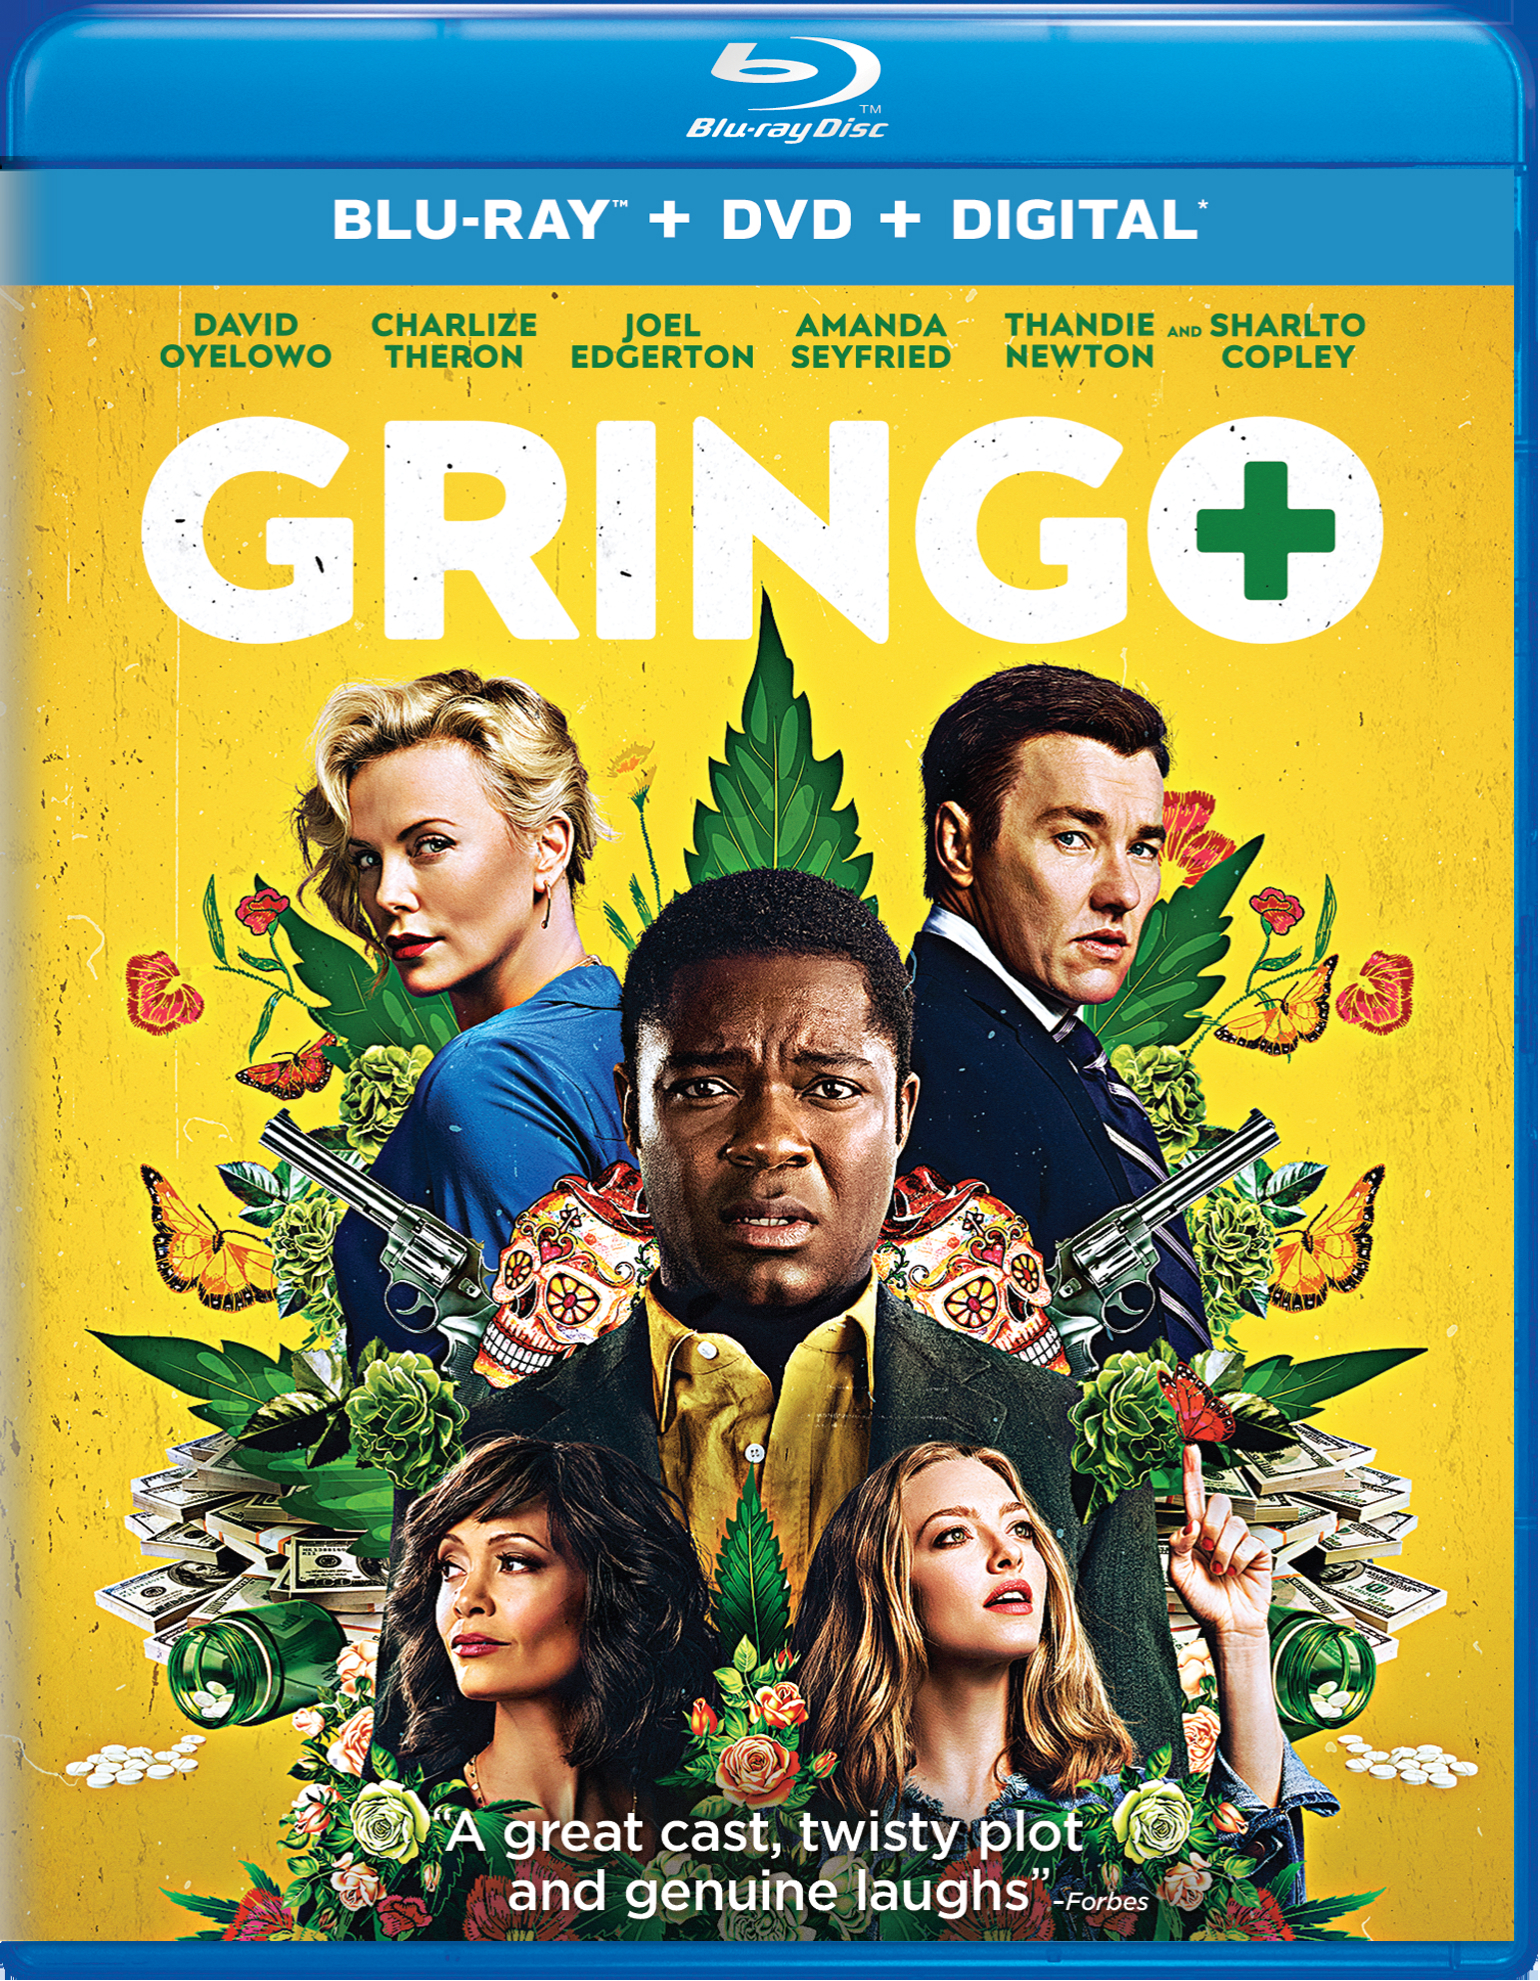 Gringo (DVD + Digital) - Blu-ray [ 2018 ]  - Action Movies On Blu-ray - Movies On GRUV